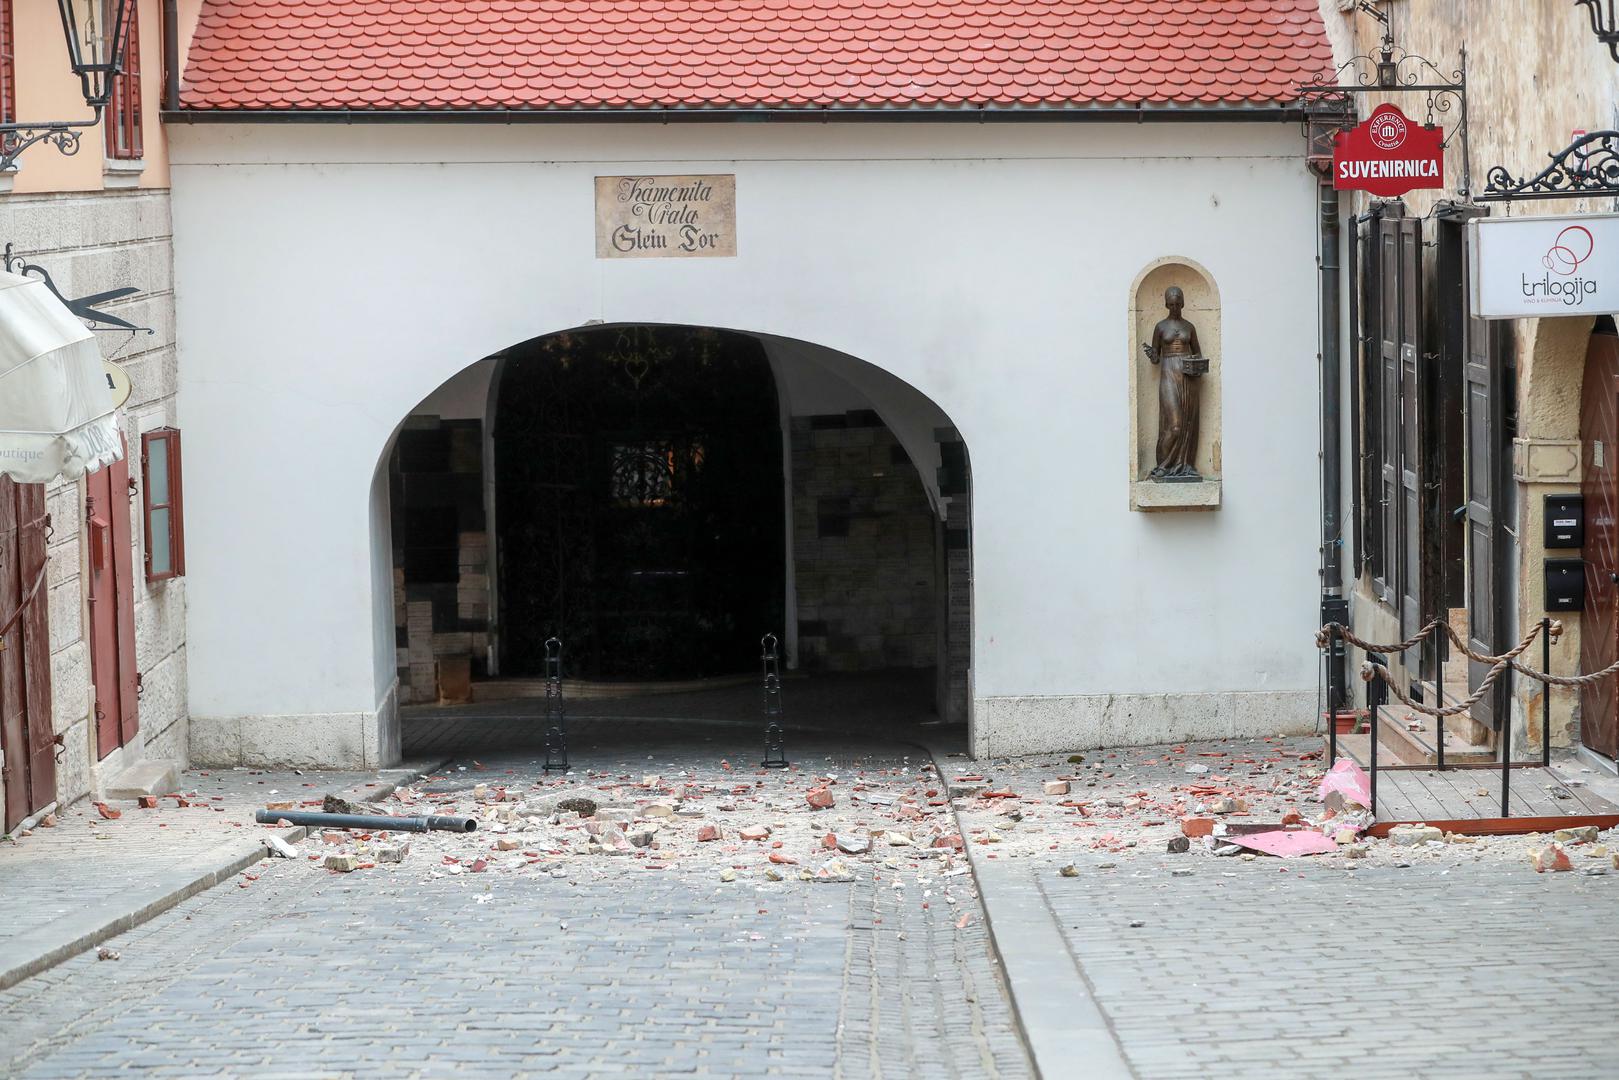 22.03.2020., Zagreb - Ostecenja u Zagreba nakon potresa jacine 5.3. po Richteru. Photo: Sanjin Strukic/PIXSELL